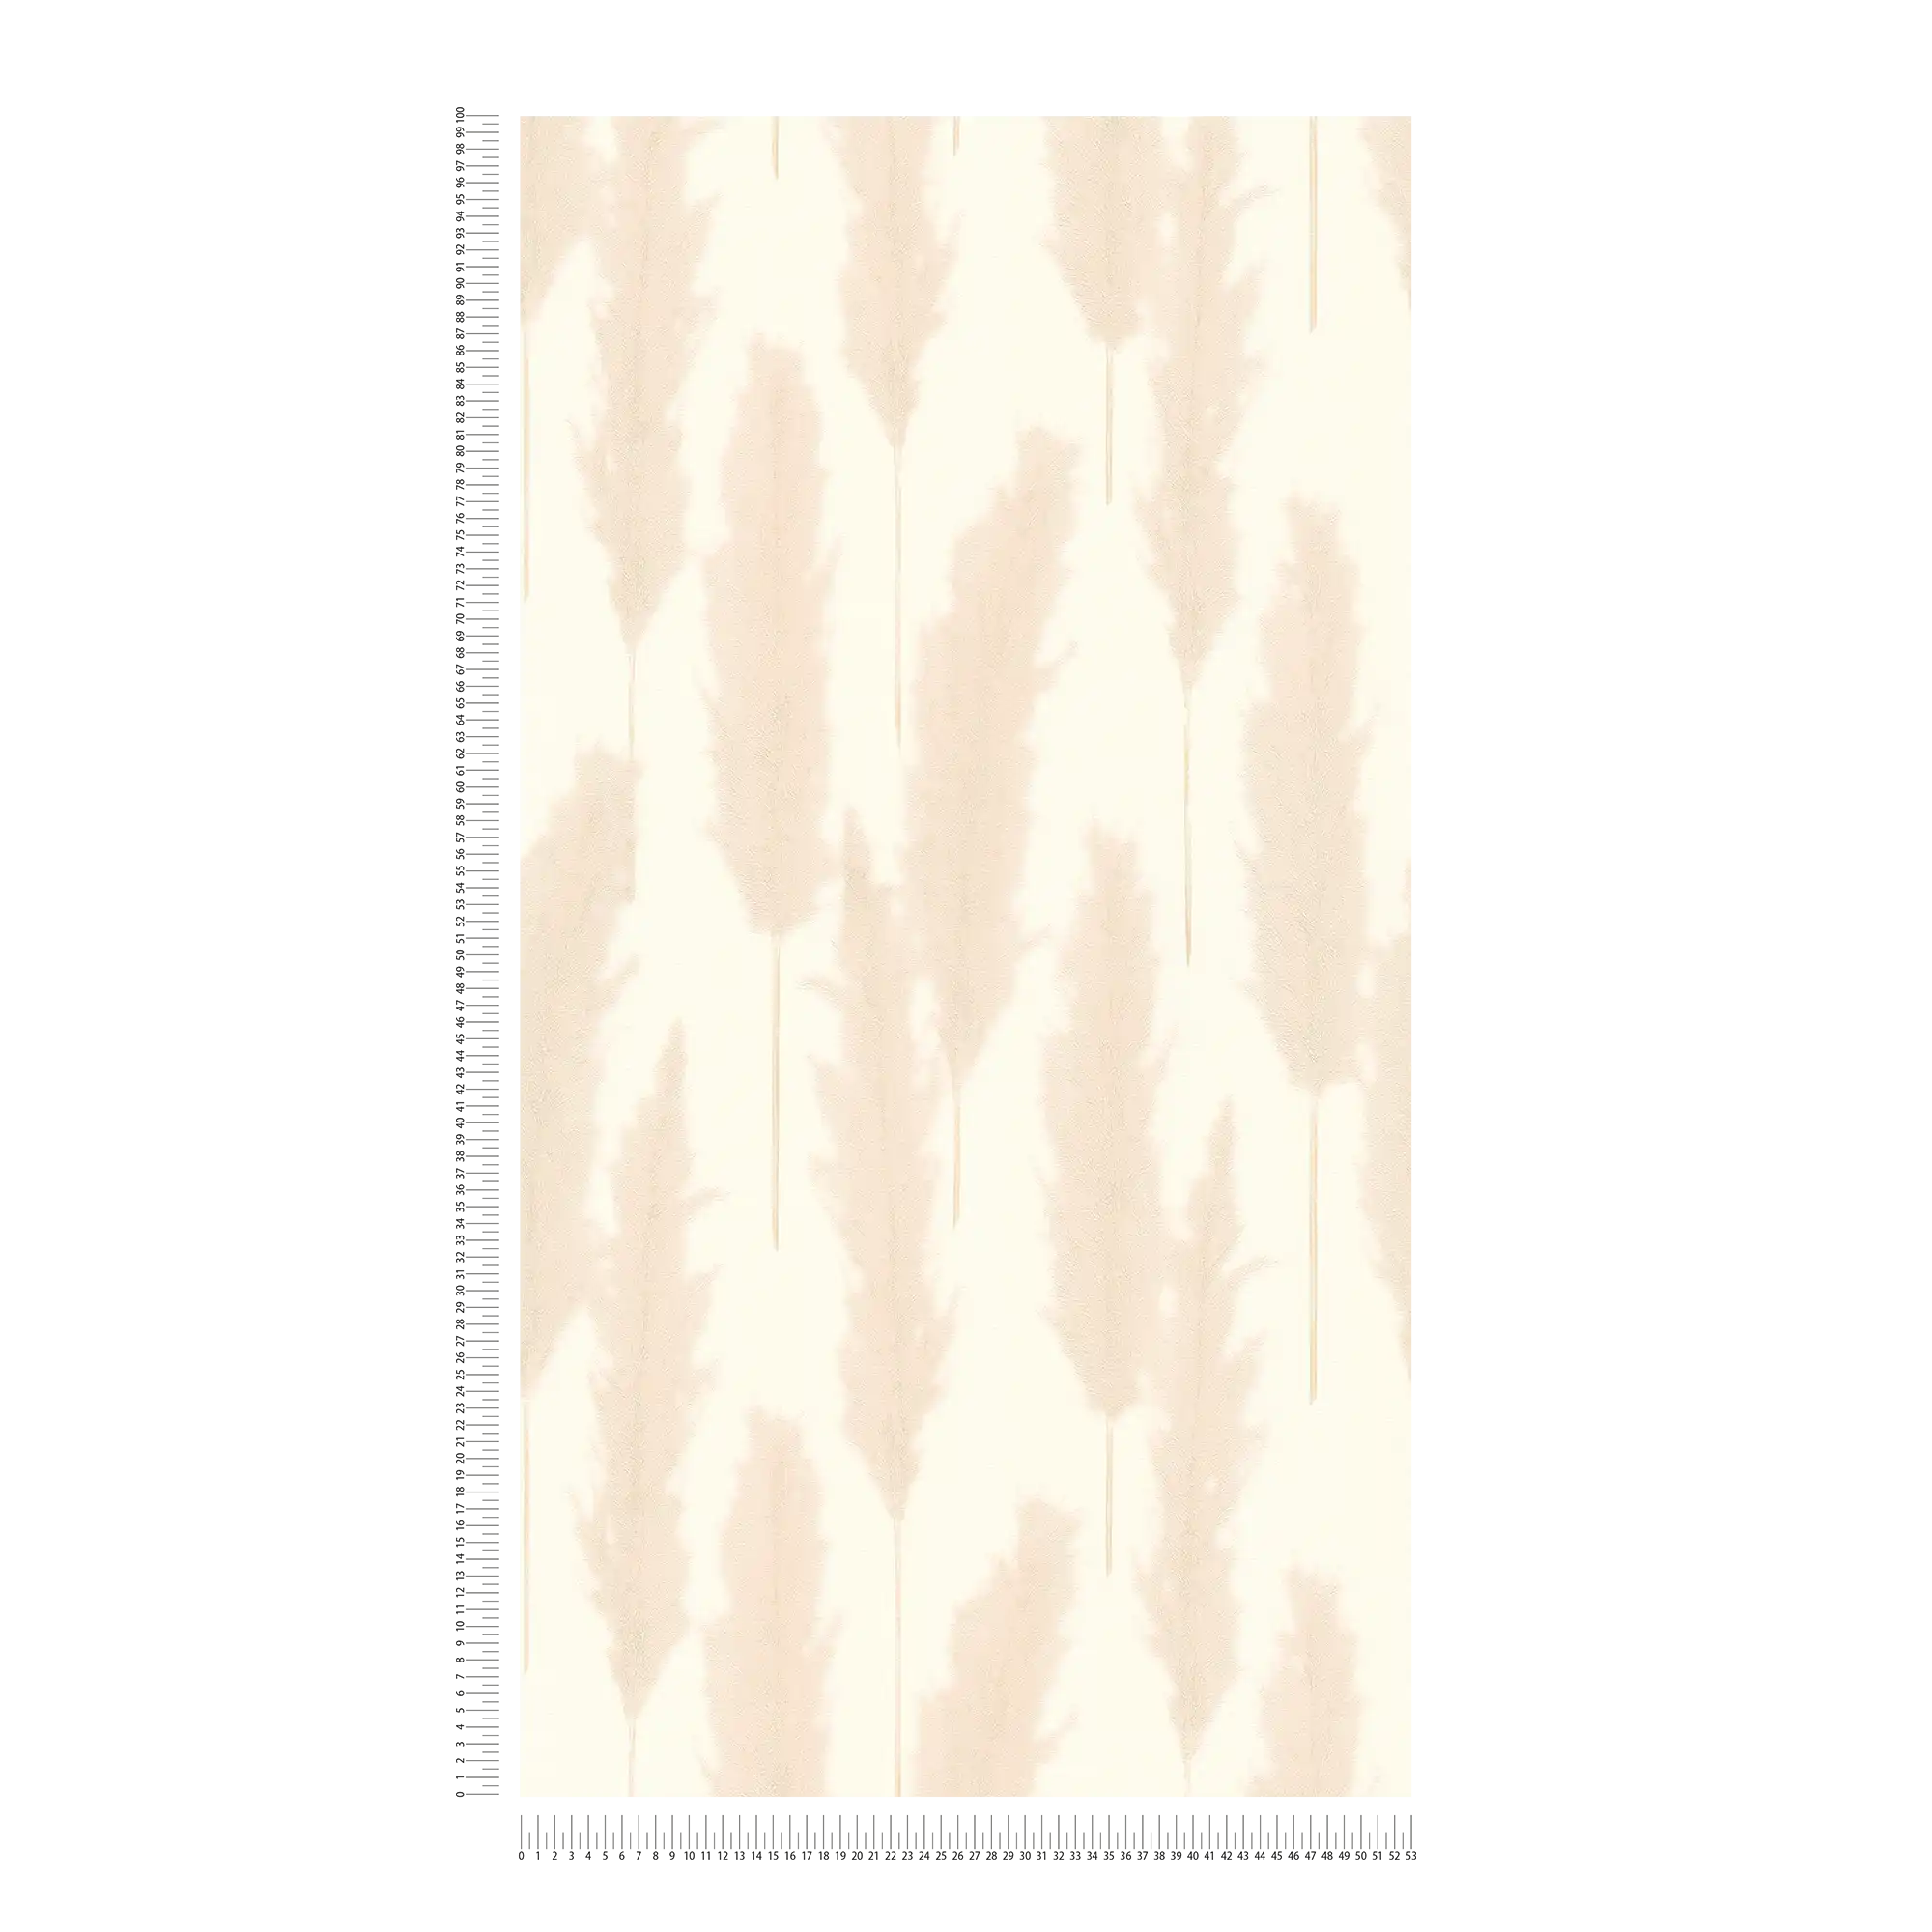             Wallpaper with lampbush grass design - beige, cream
        